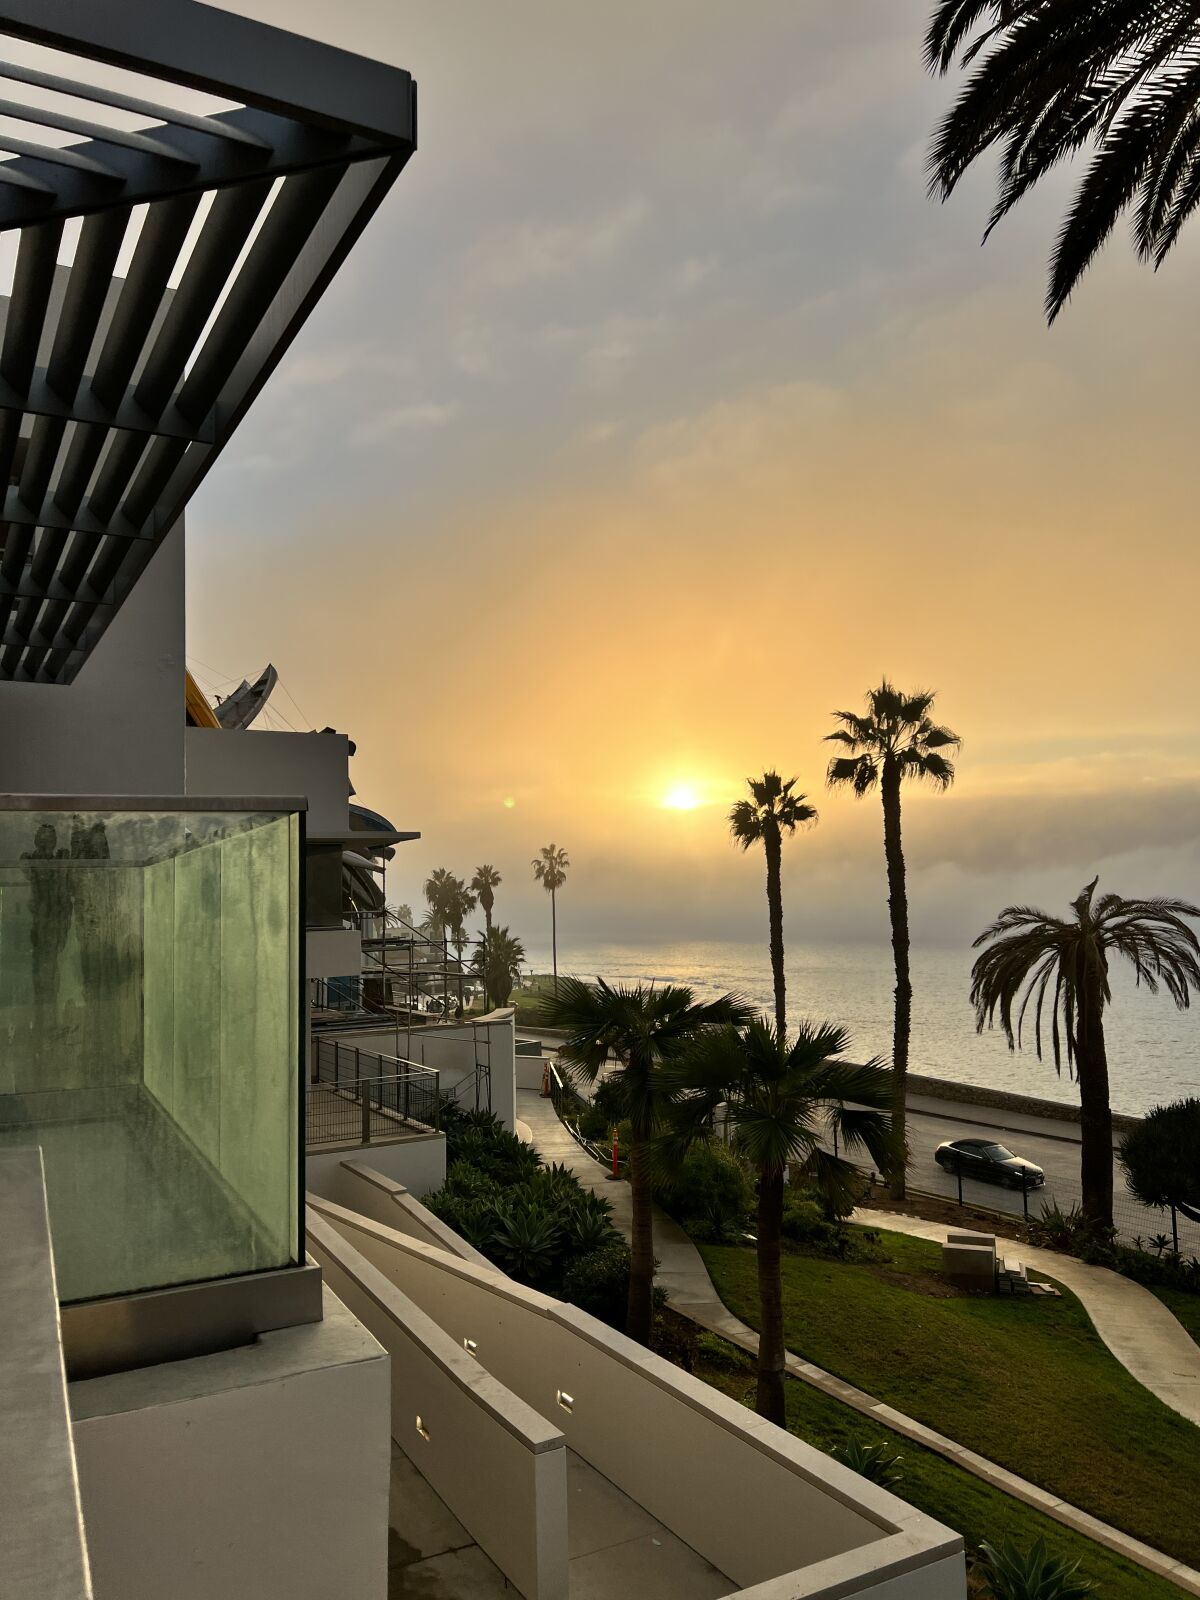 New terraces overlook the coastline at MCASD's renovated La Jolla location.